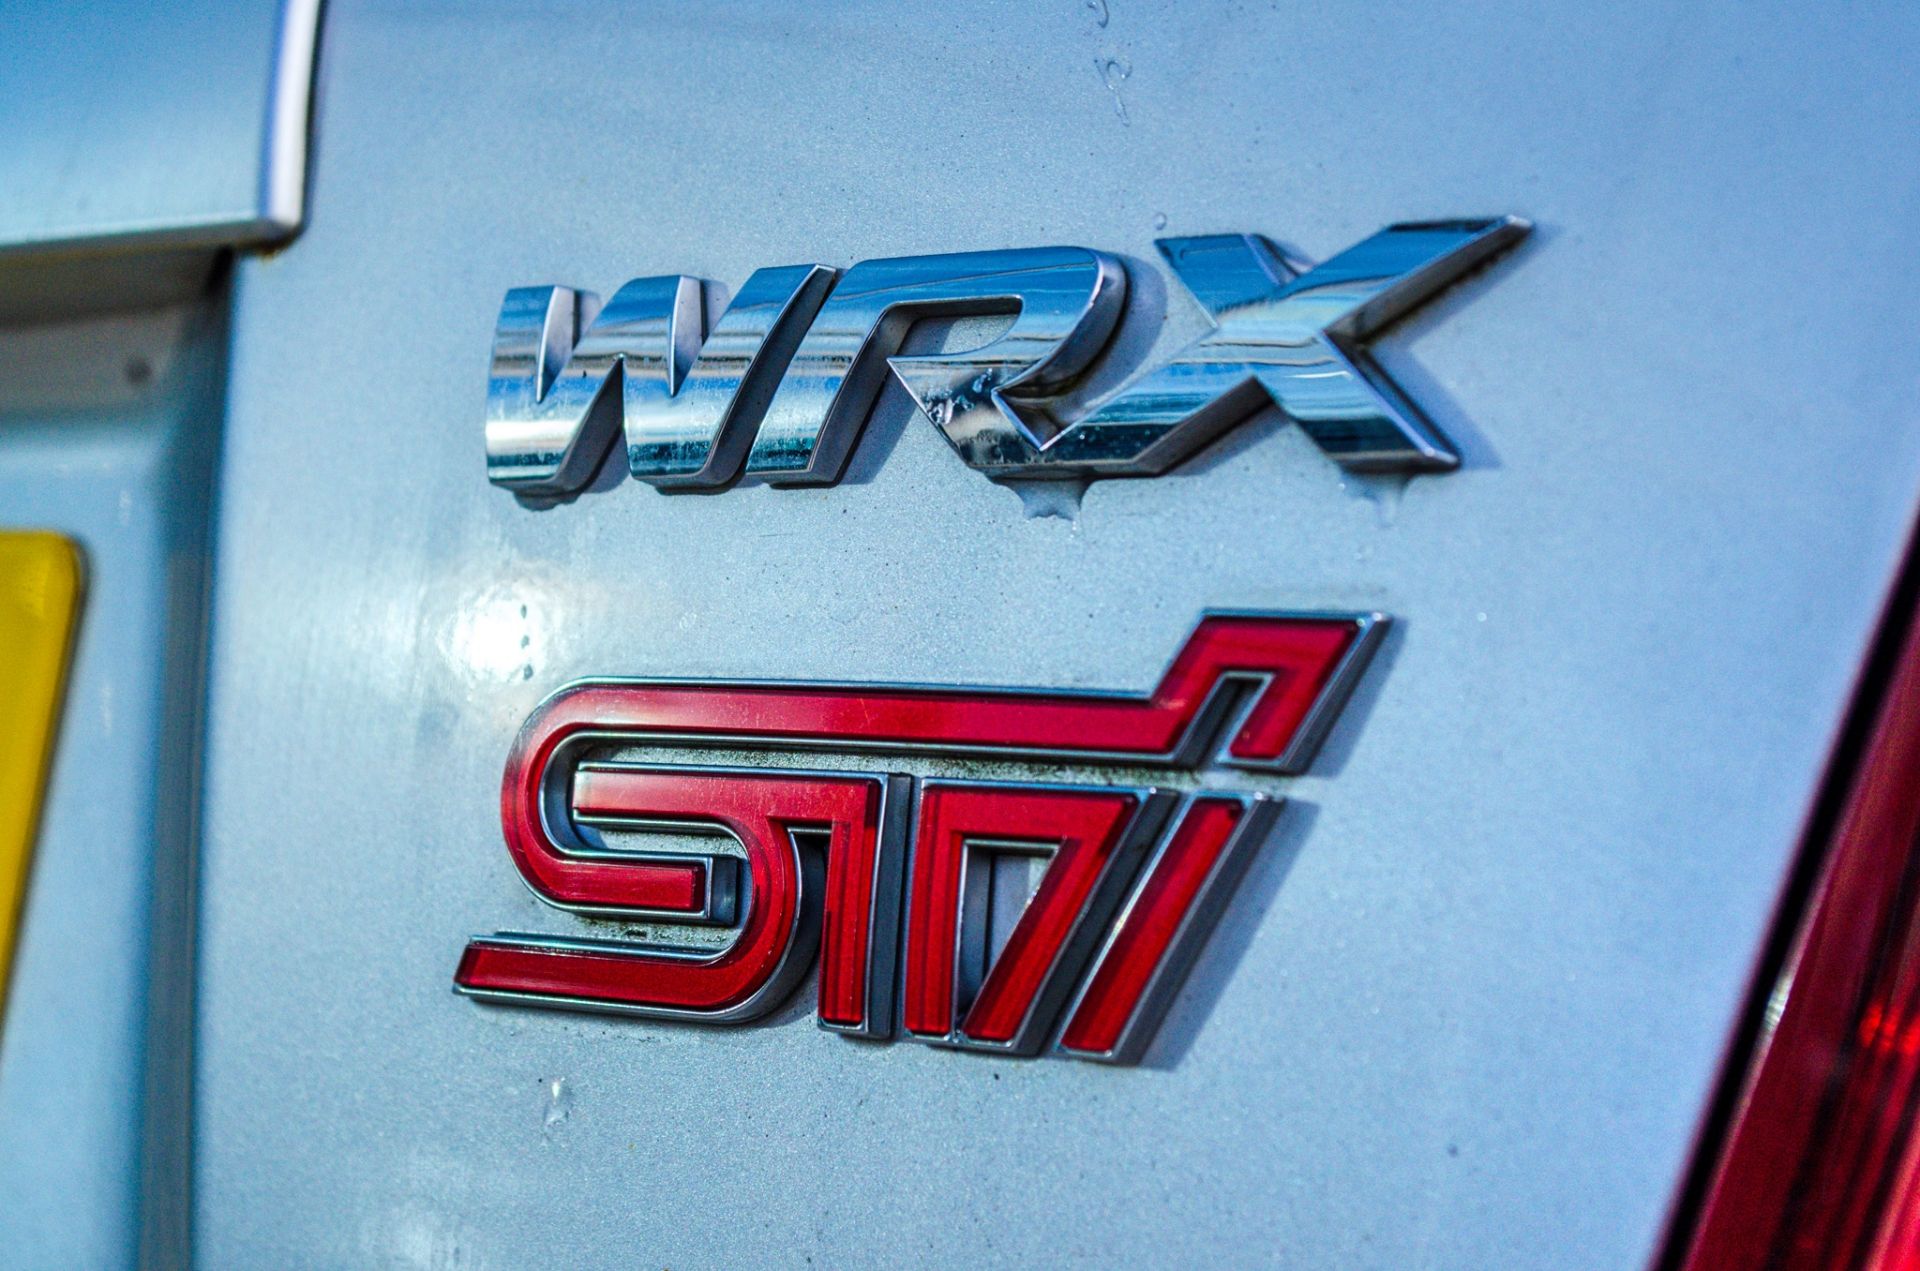 2011 Subaru Impreza WRX STI-TP UK AWD 2.5 litre turbo 4 door saloon car - Image 30 of 57